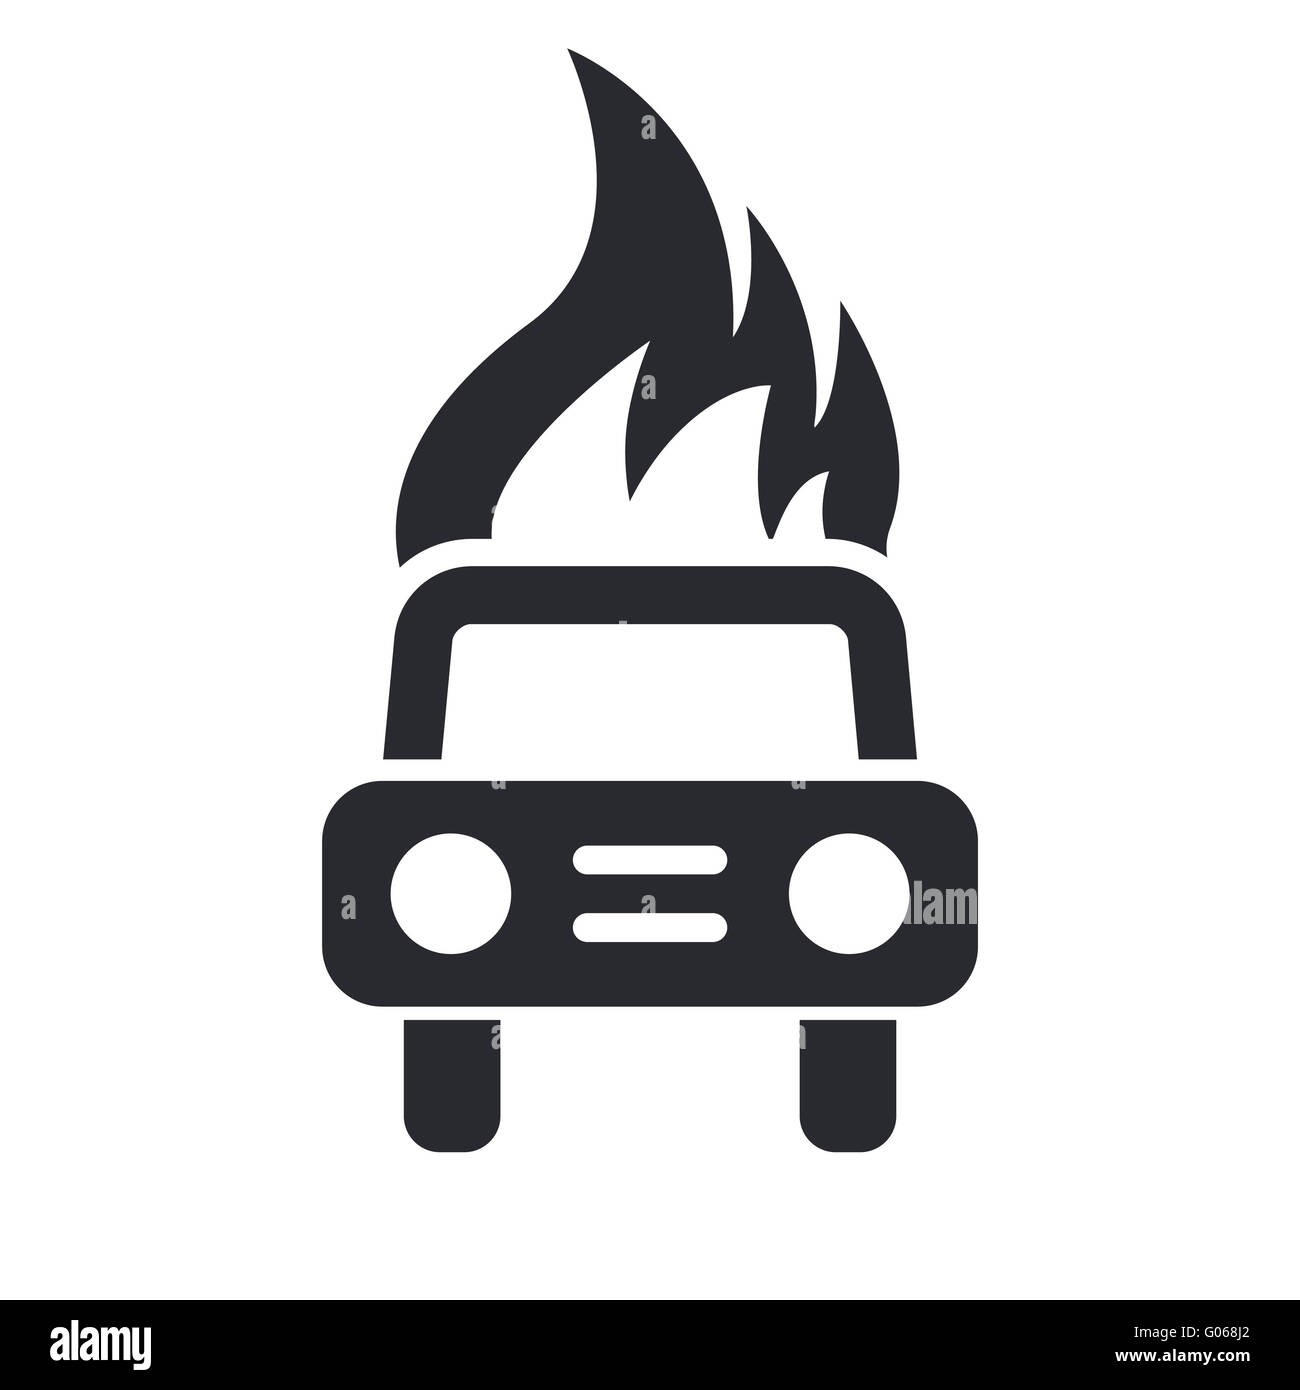 Vector illustration of isolated car burning icon Stock Photo